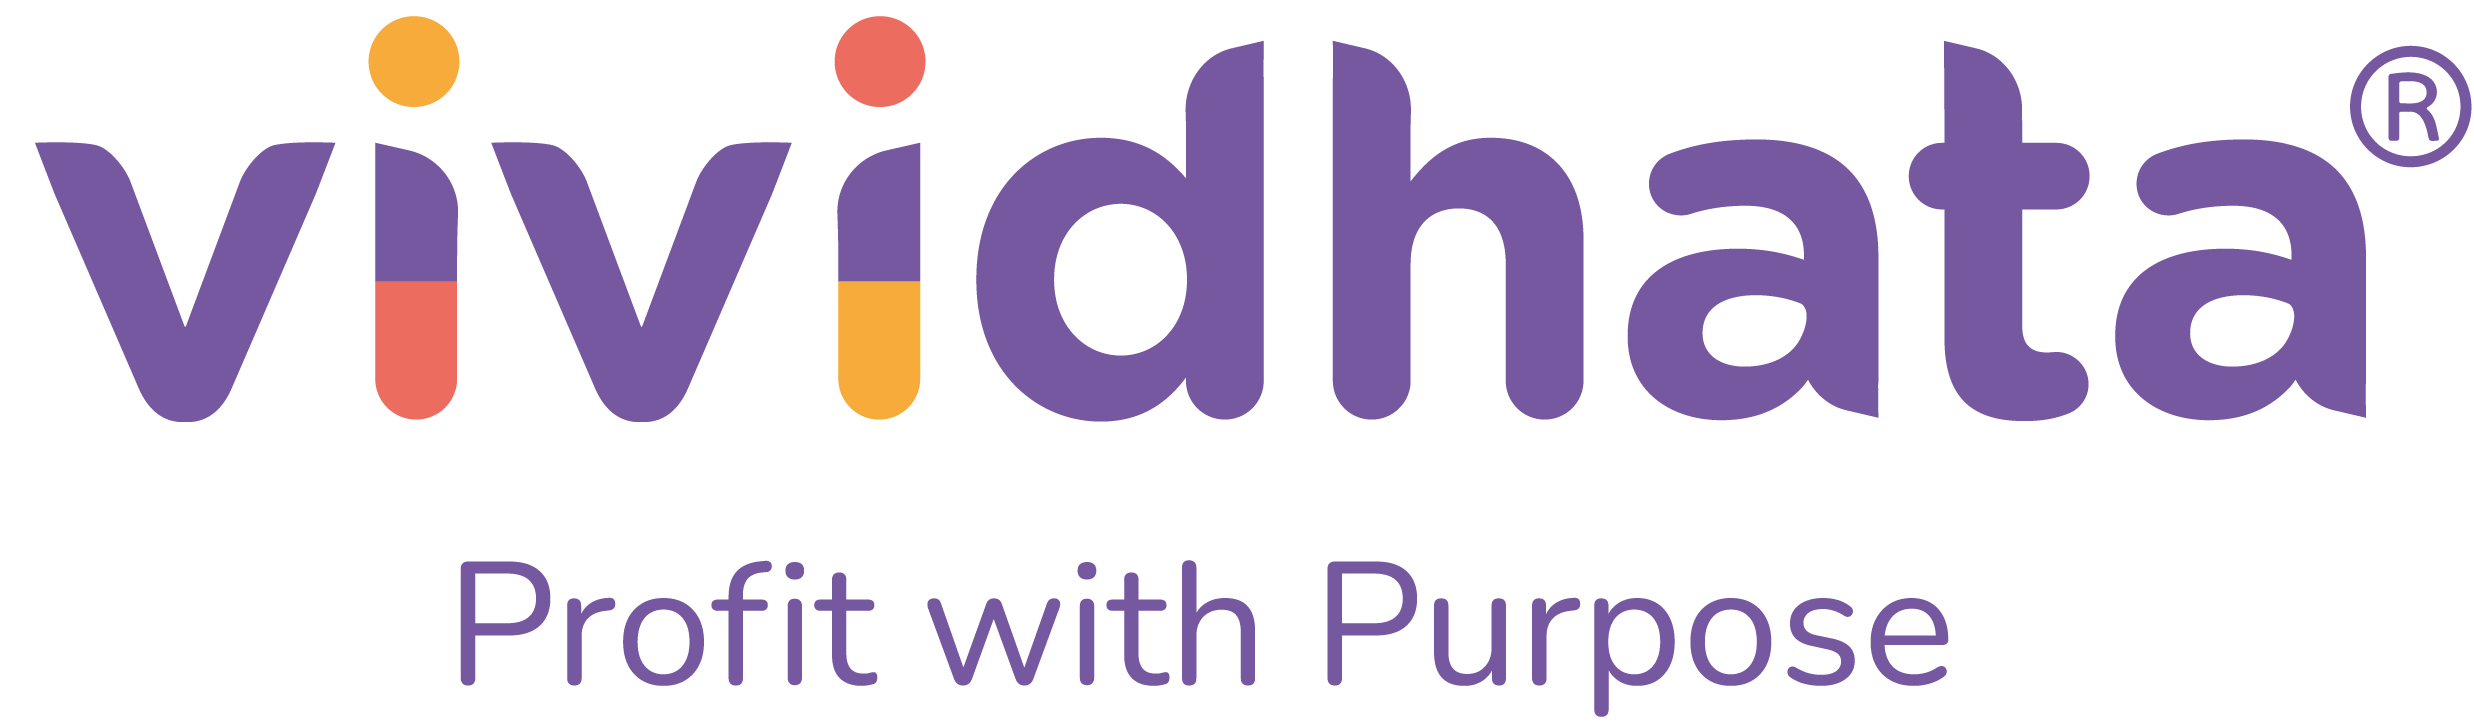 Vividhata Logo - with tagline Profit with Purpose